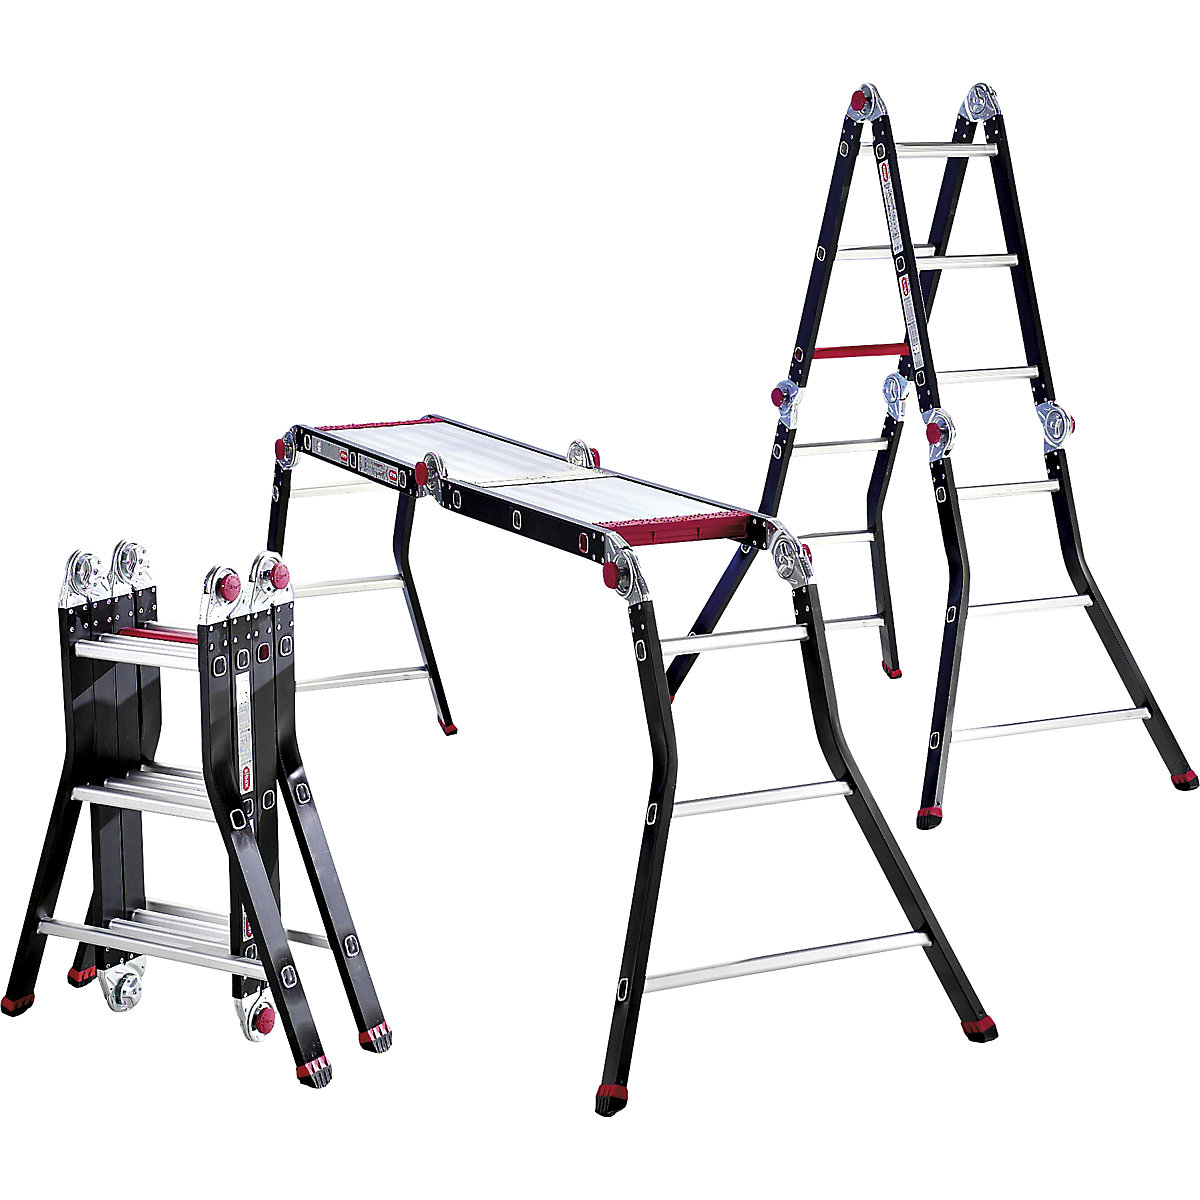 Professional multi-purpose ladder – Altrex